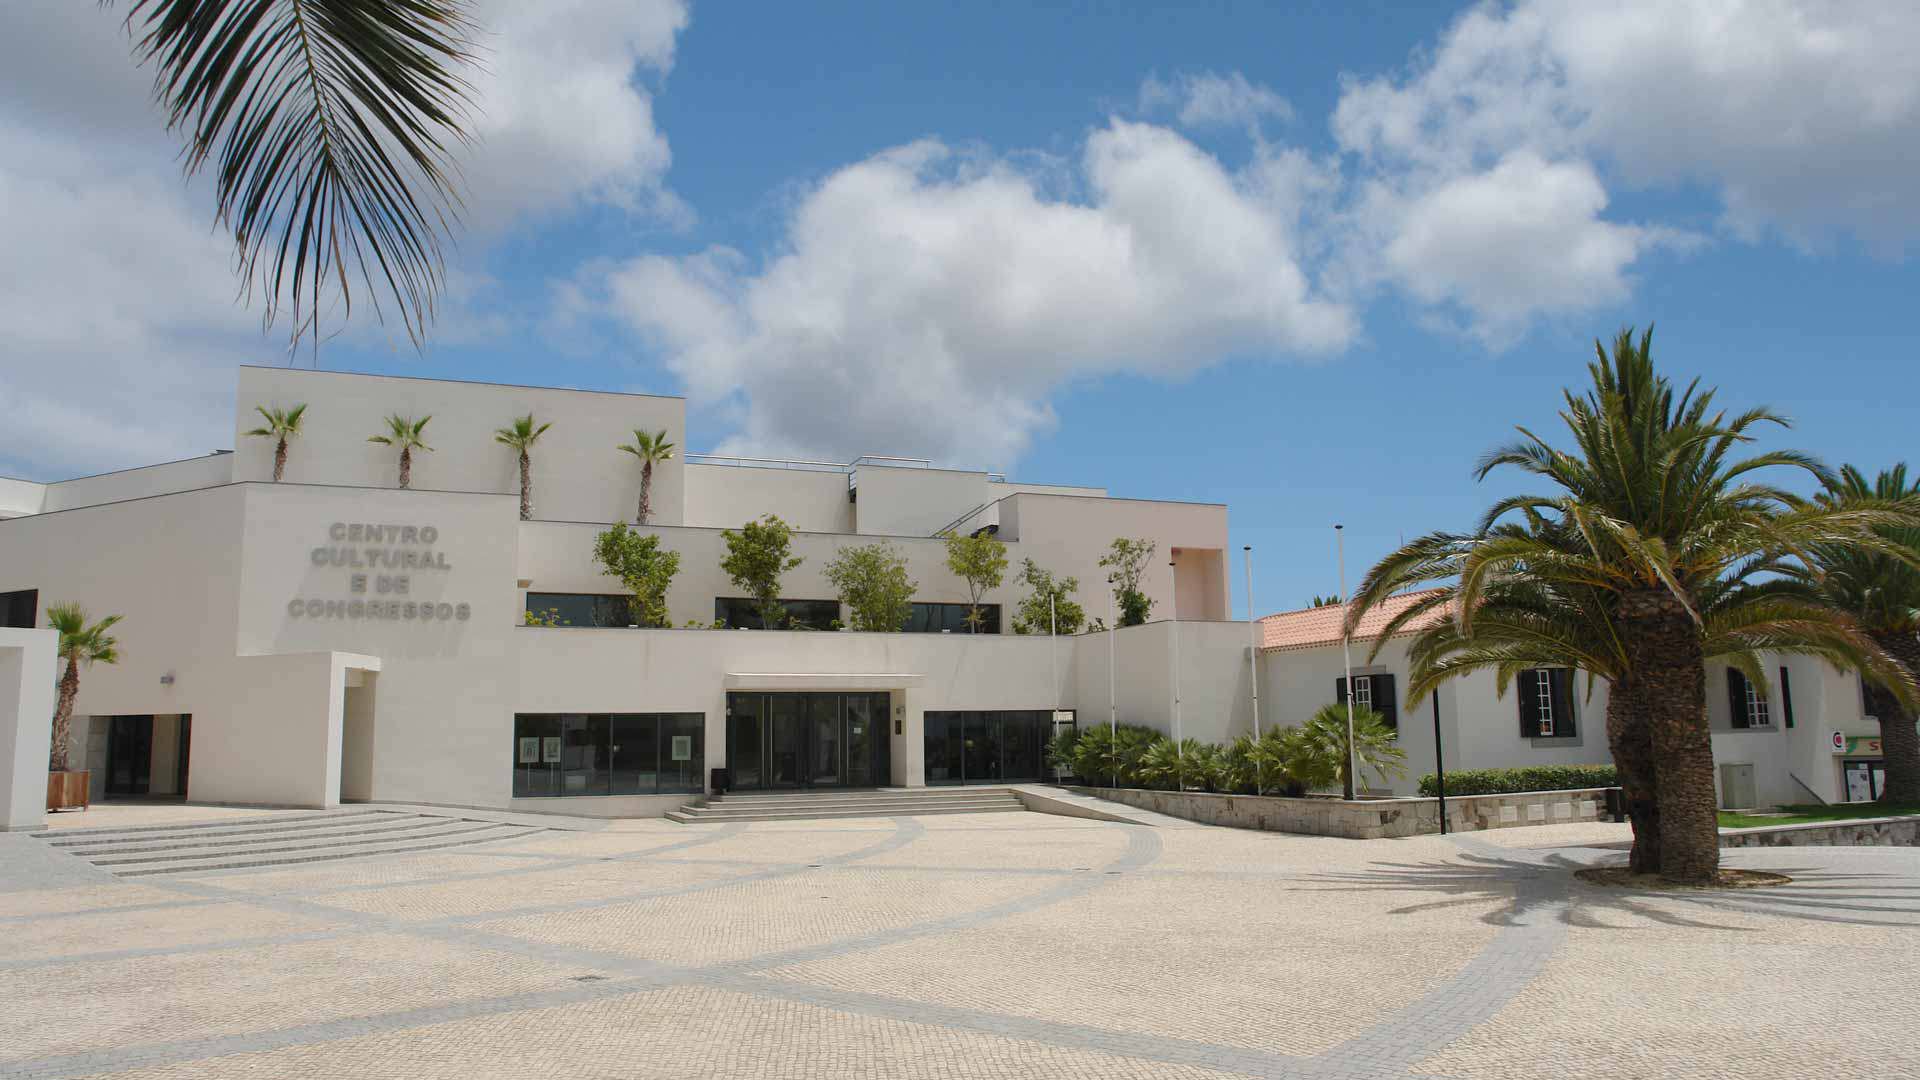 Centre culturel des congrès de Porto Santo 6